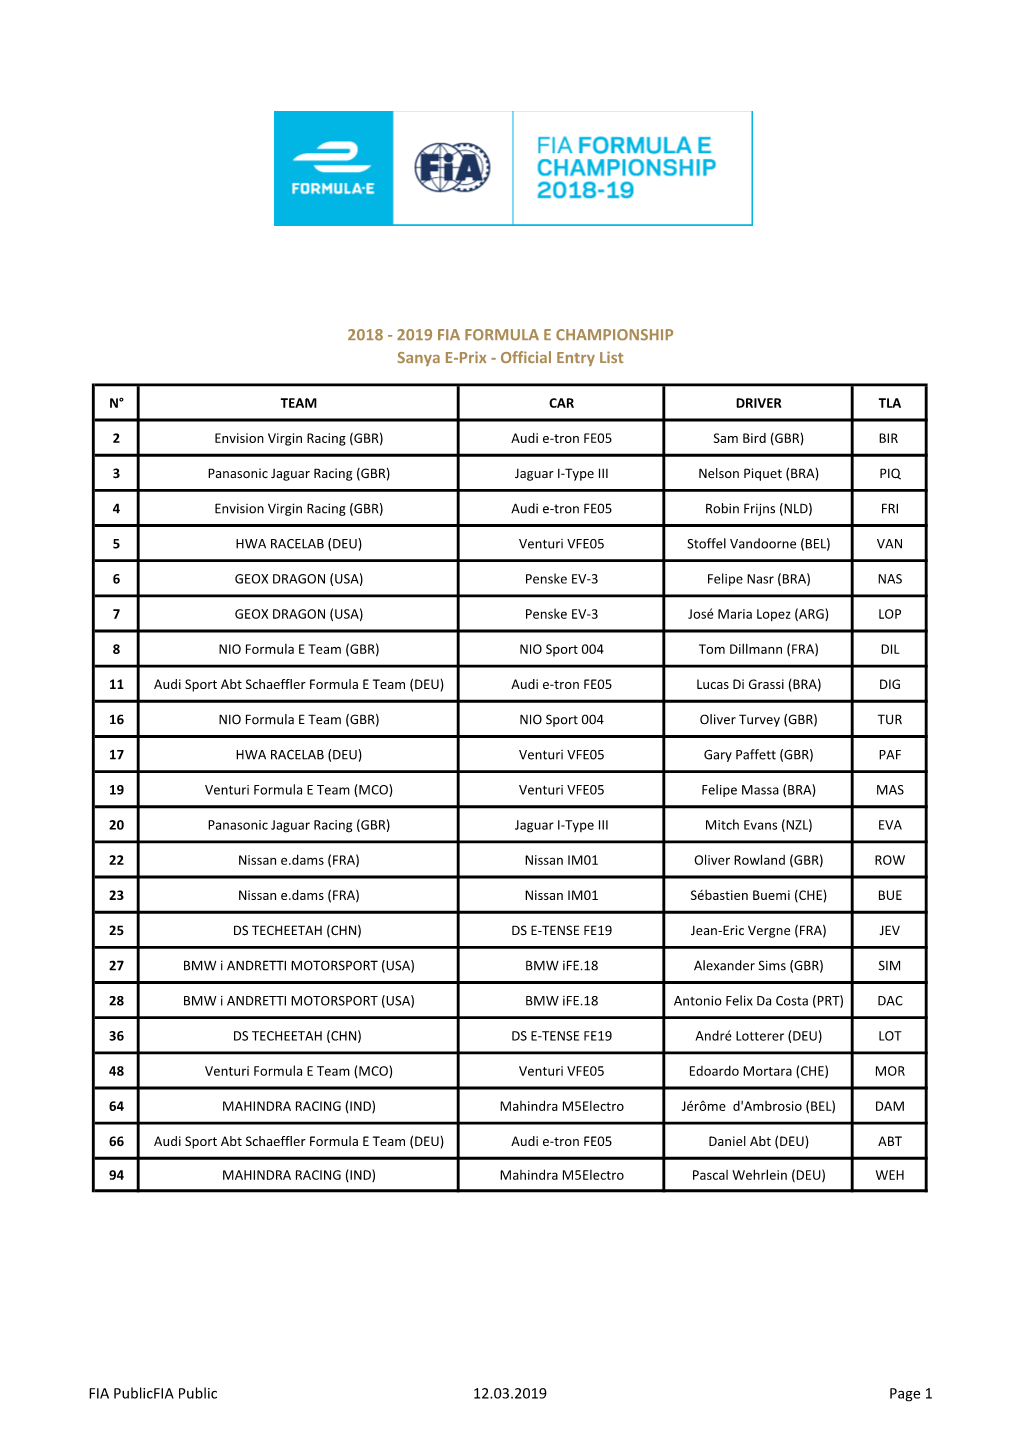 Sanya E-Prix - Official Entry List